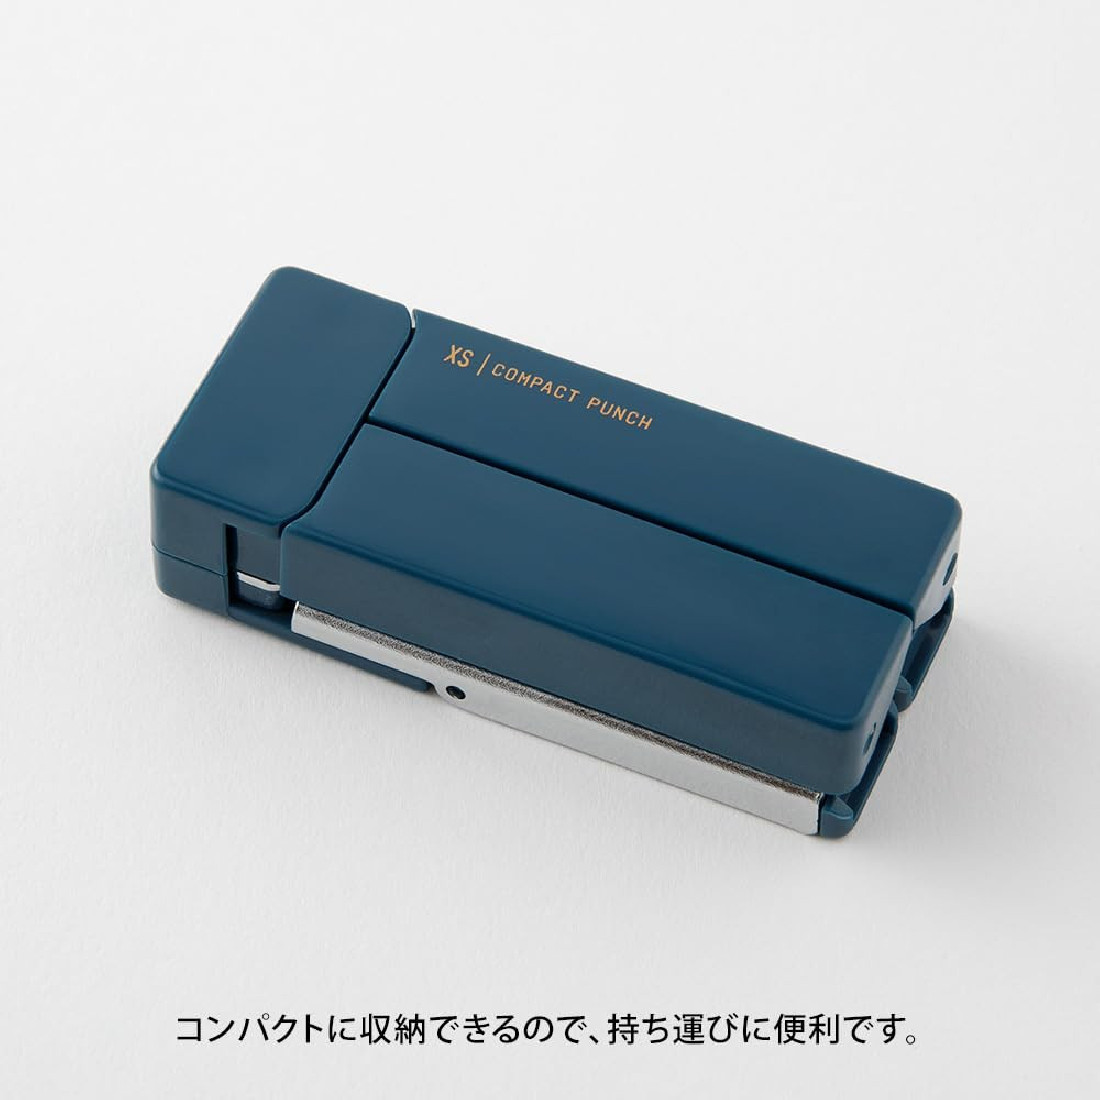 Midori XS (extra small) Compact Punch Navy Blue 35547006